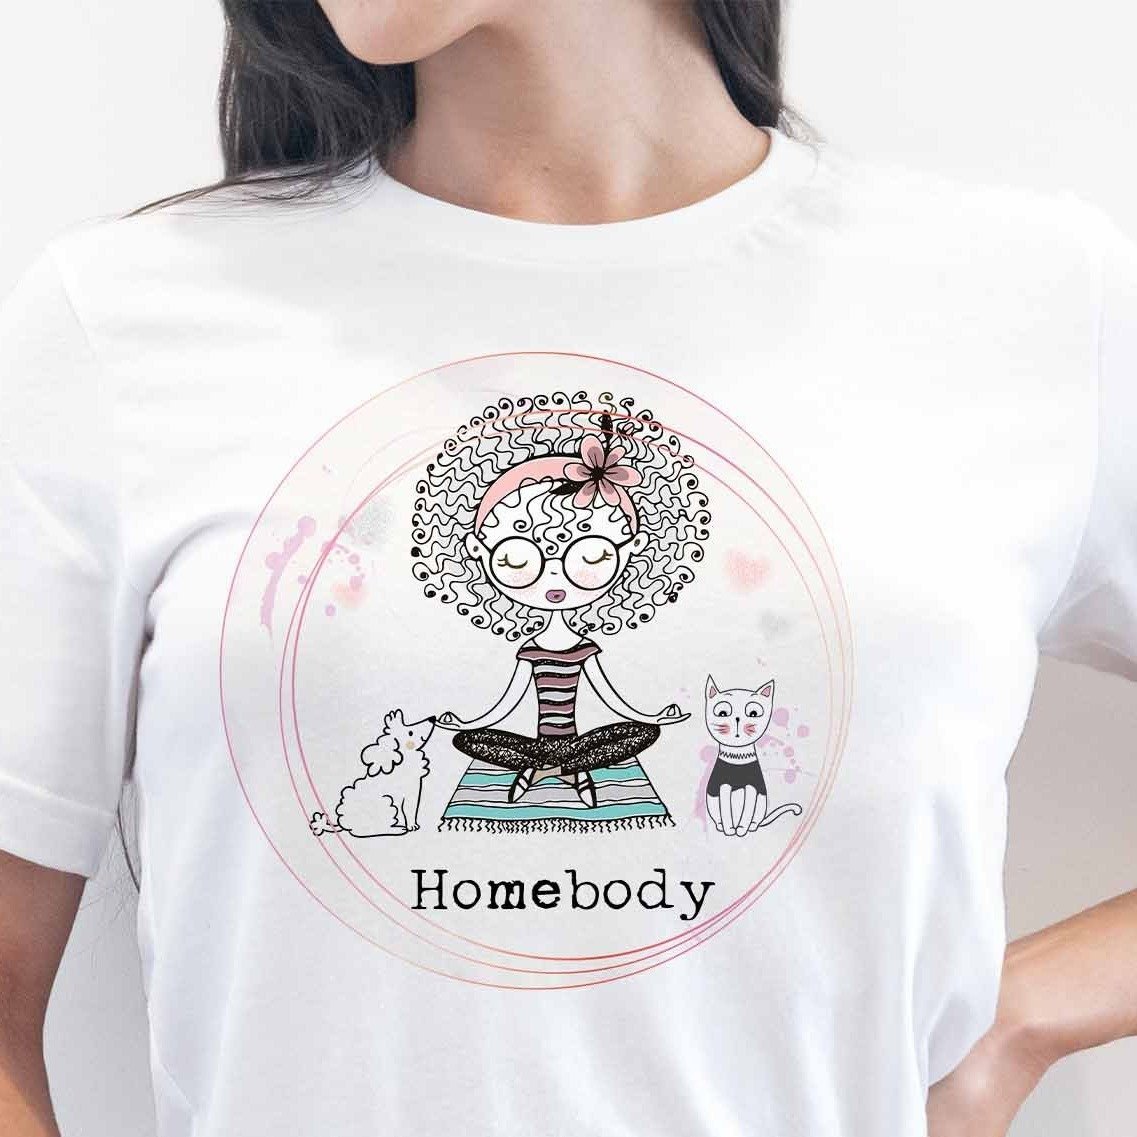 Homebody Graphic Tee - My Custom Tee Party